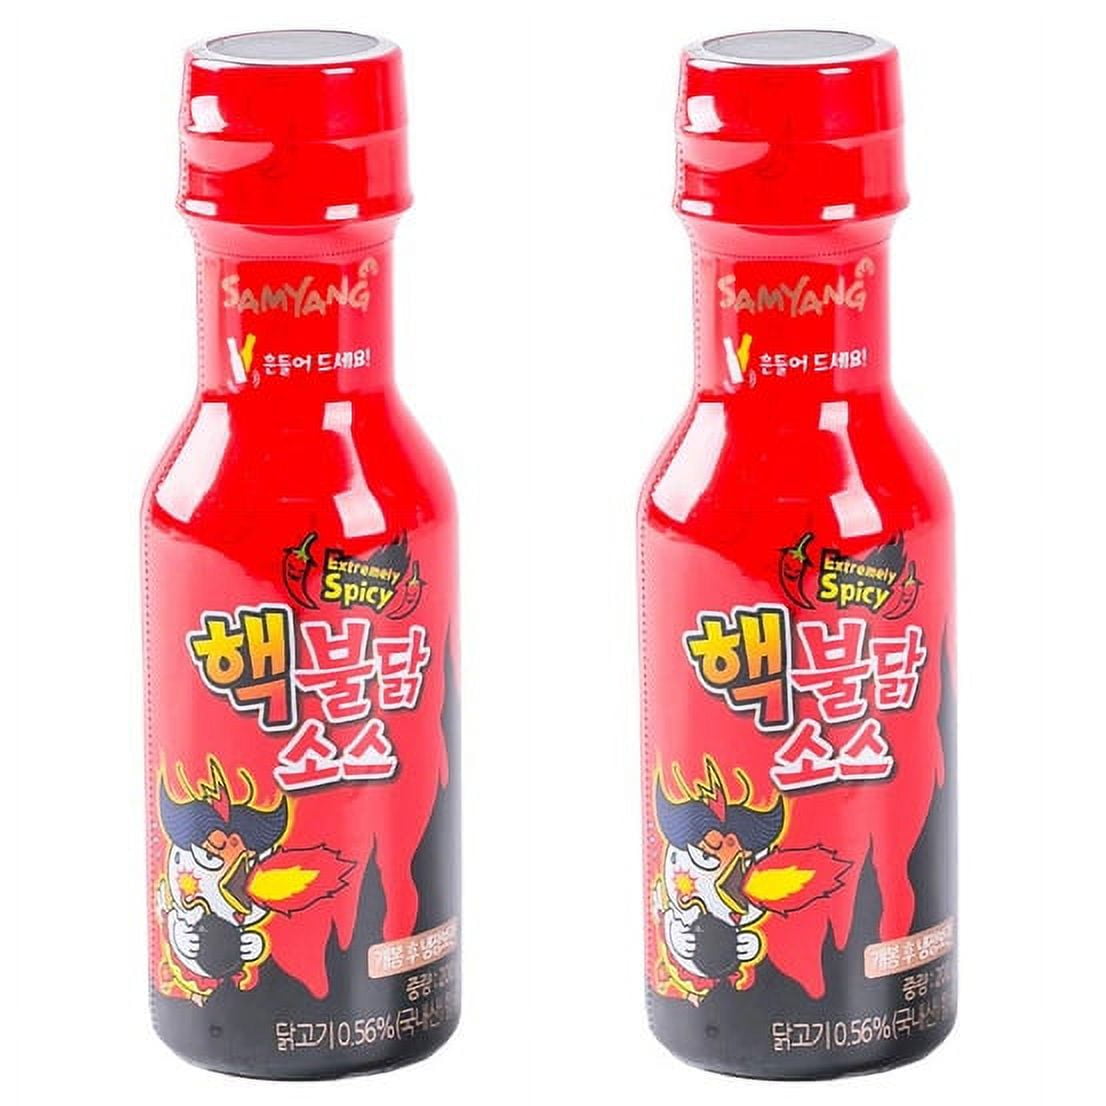 SPICEHUB Samyang Buldak Hot Chicken Flavour Sauce, 200G(PACK OF 2